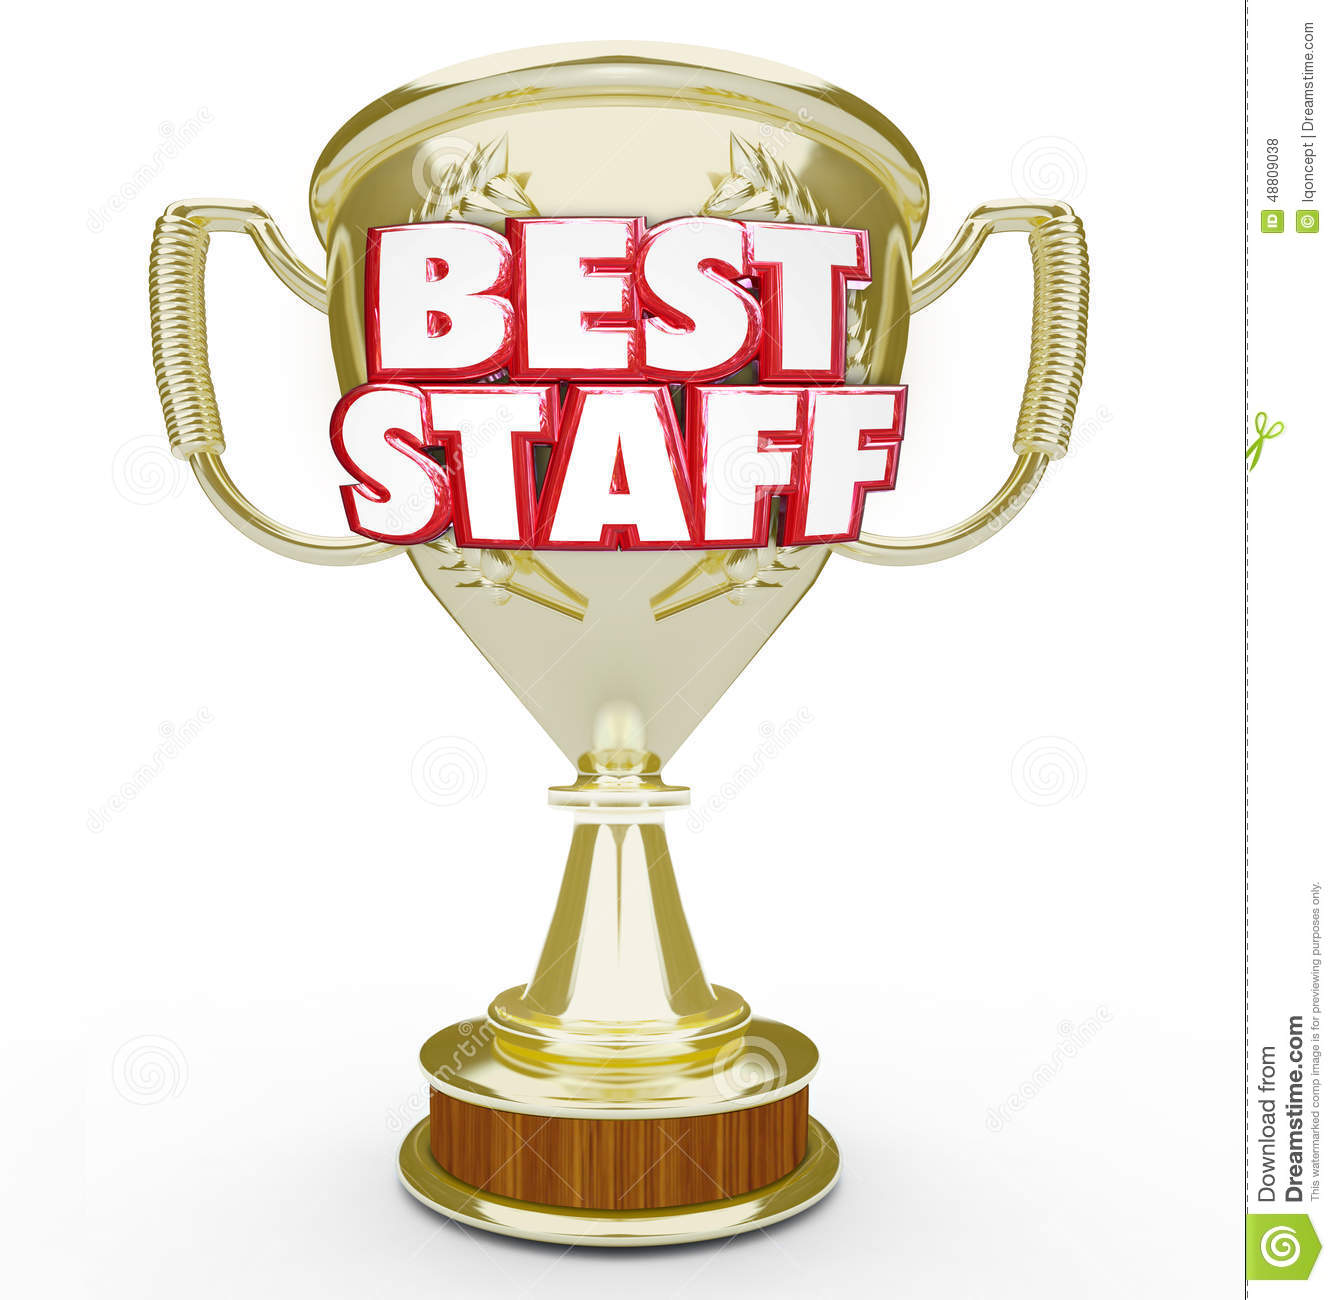 Best staff award